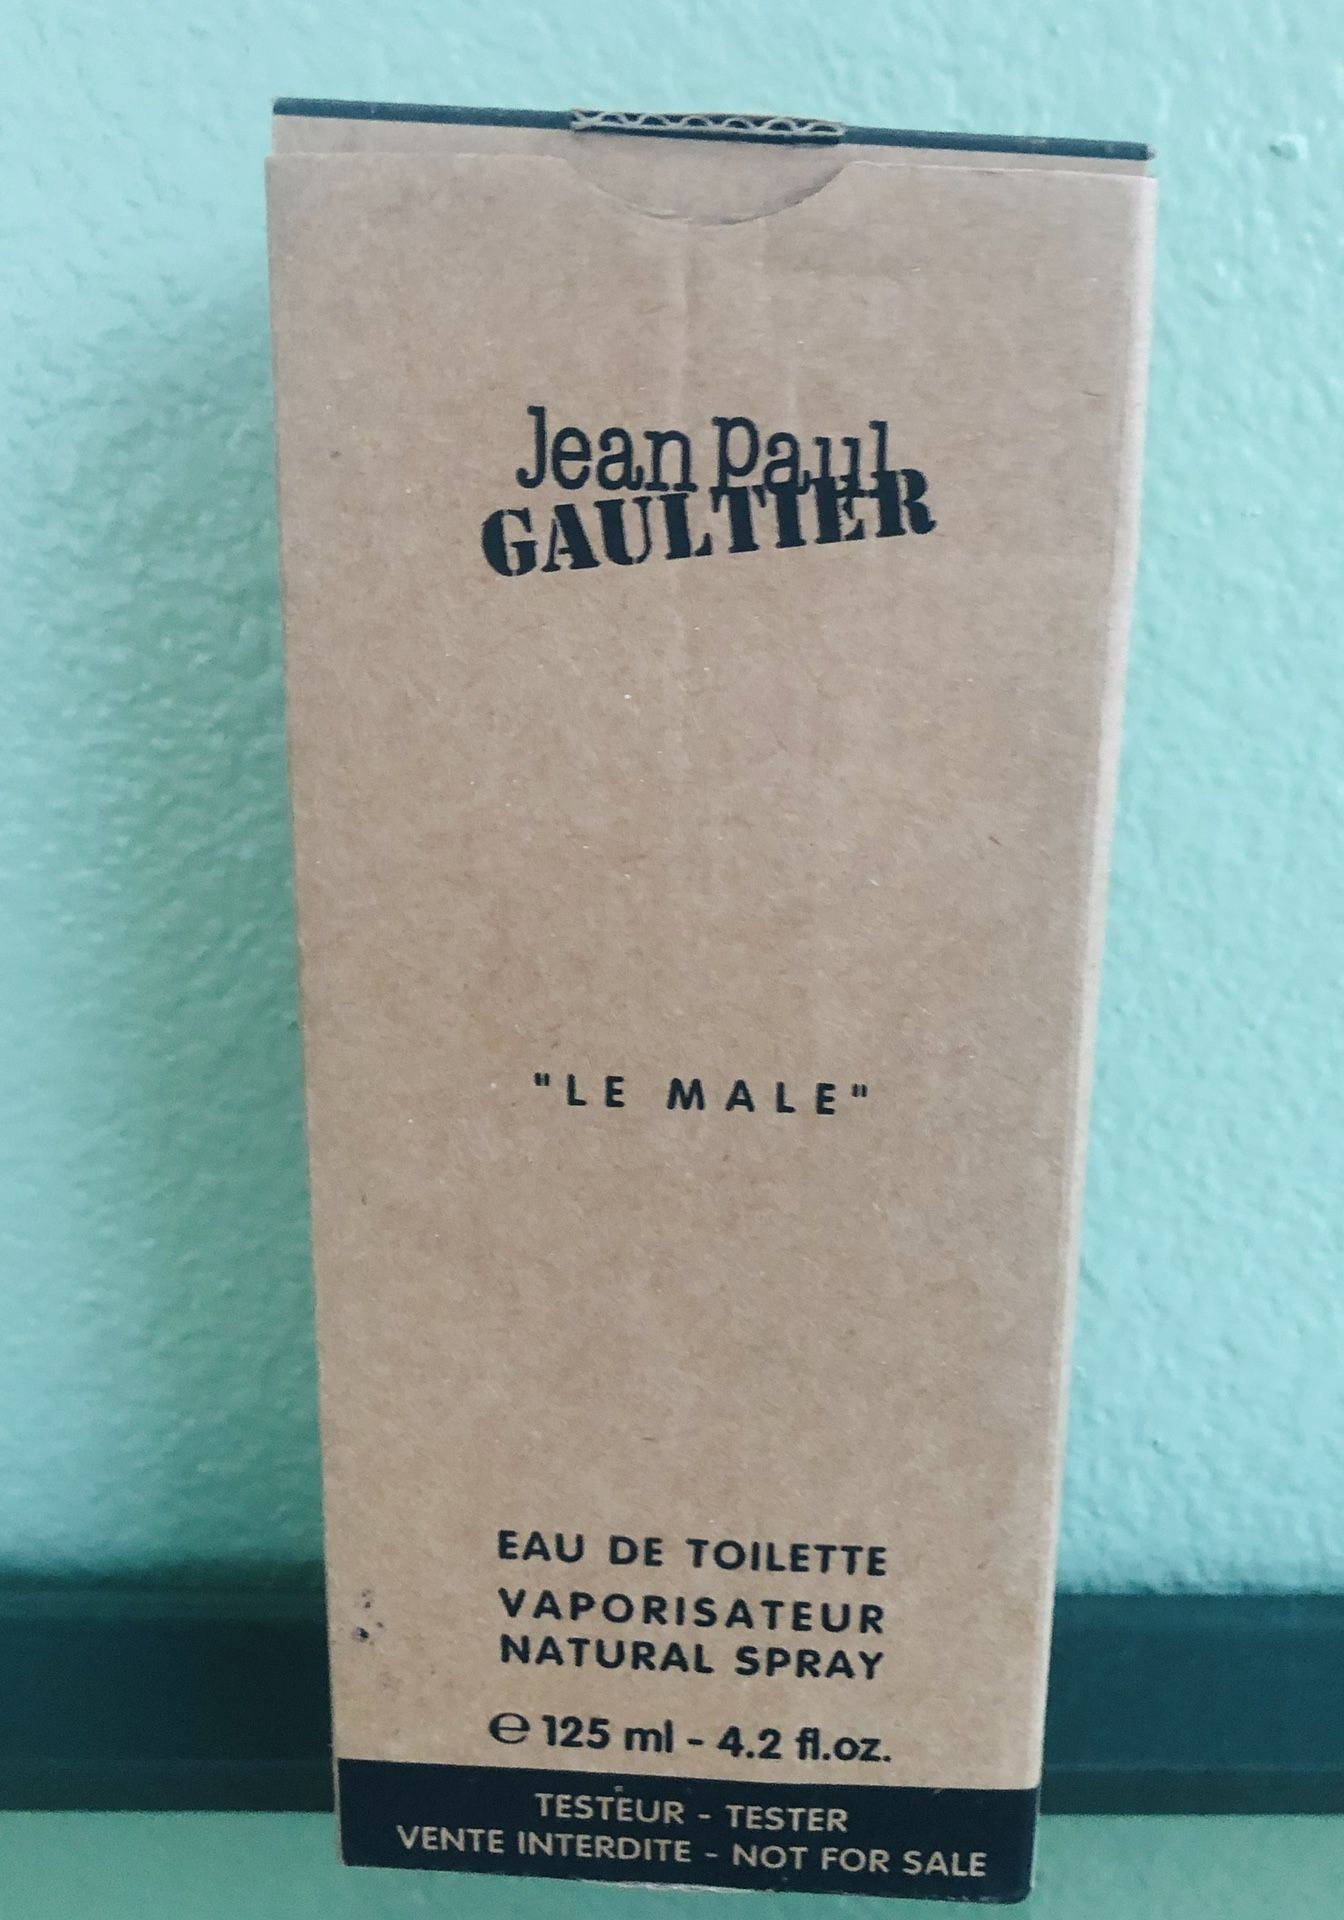 Jean Paul Gautier for man